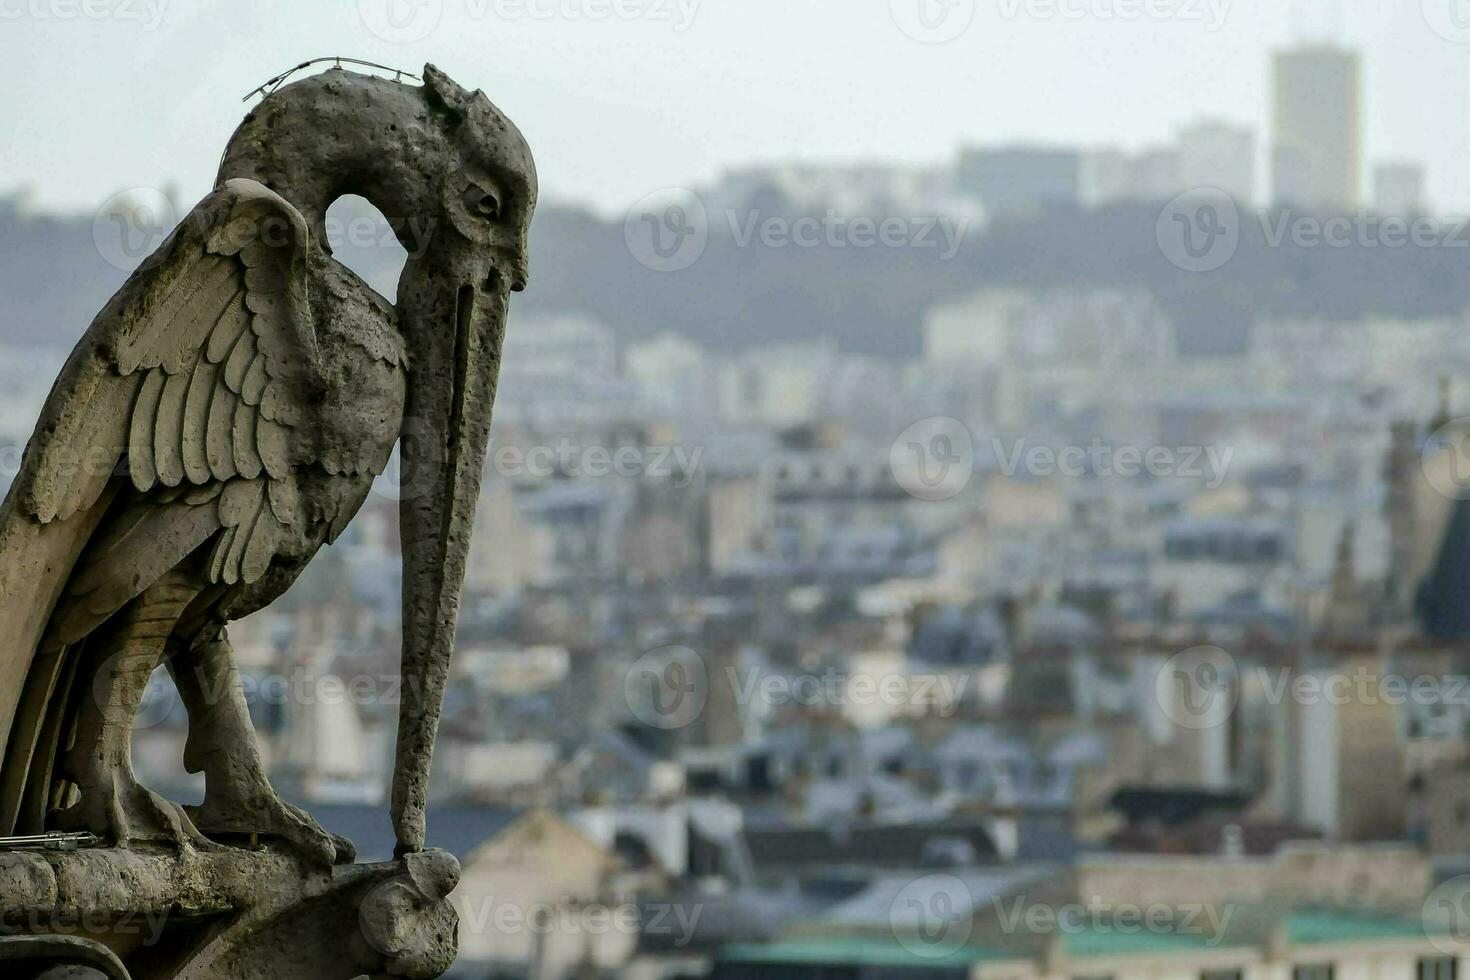 Ornate bird sculpture - France 2022 photo